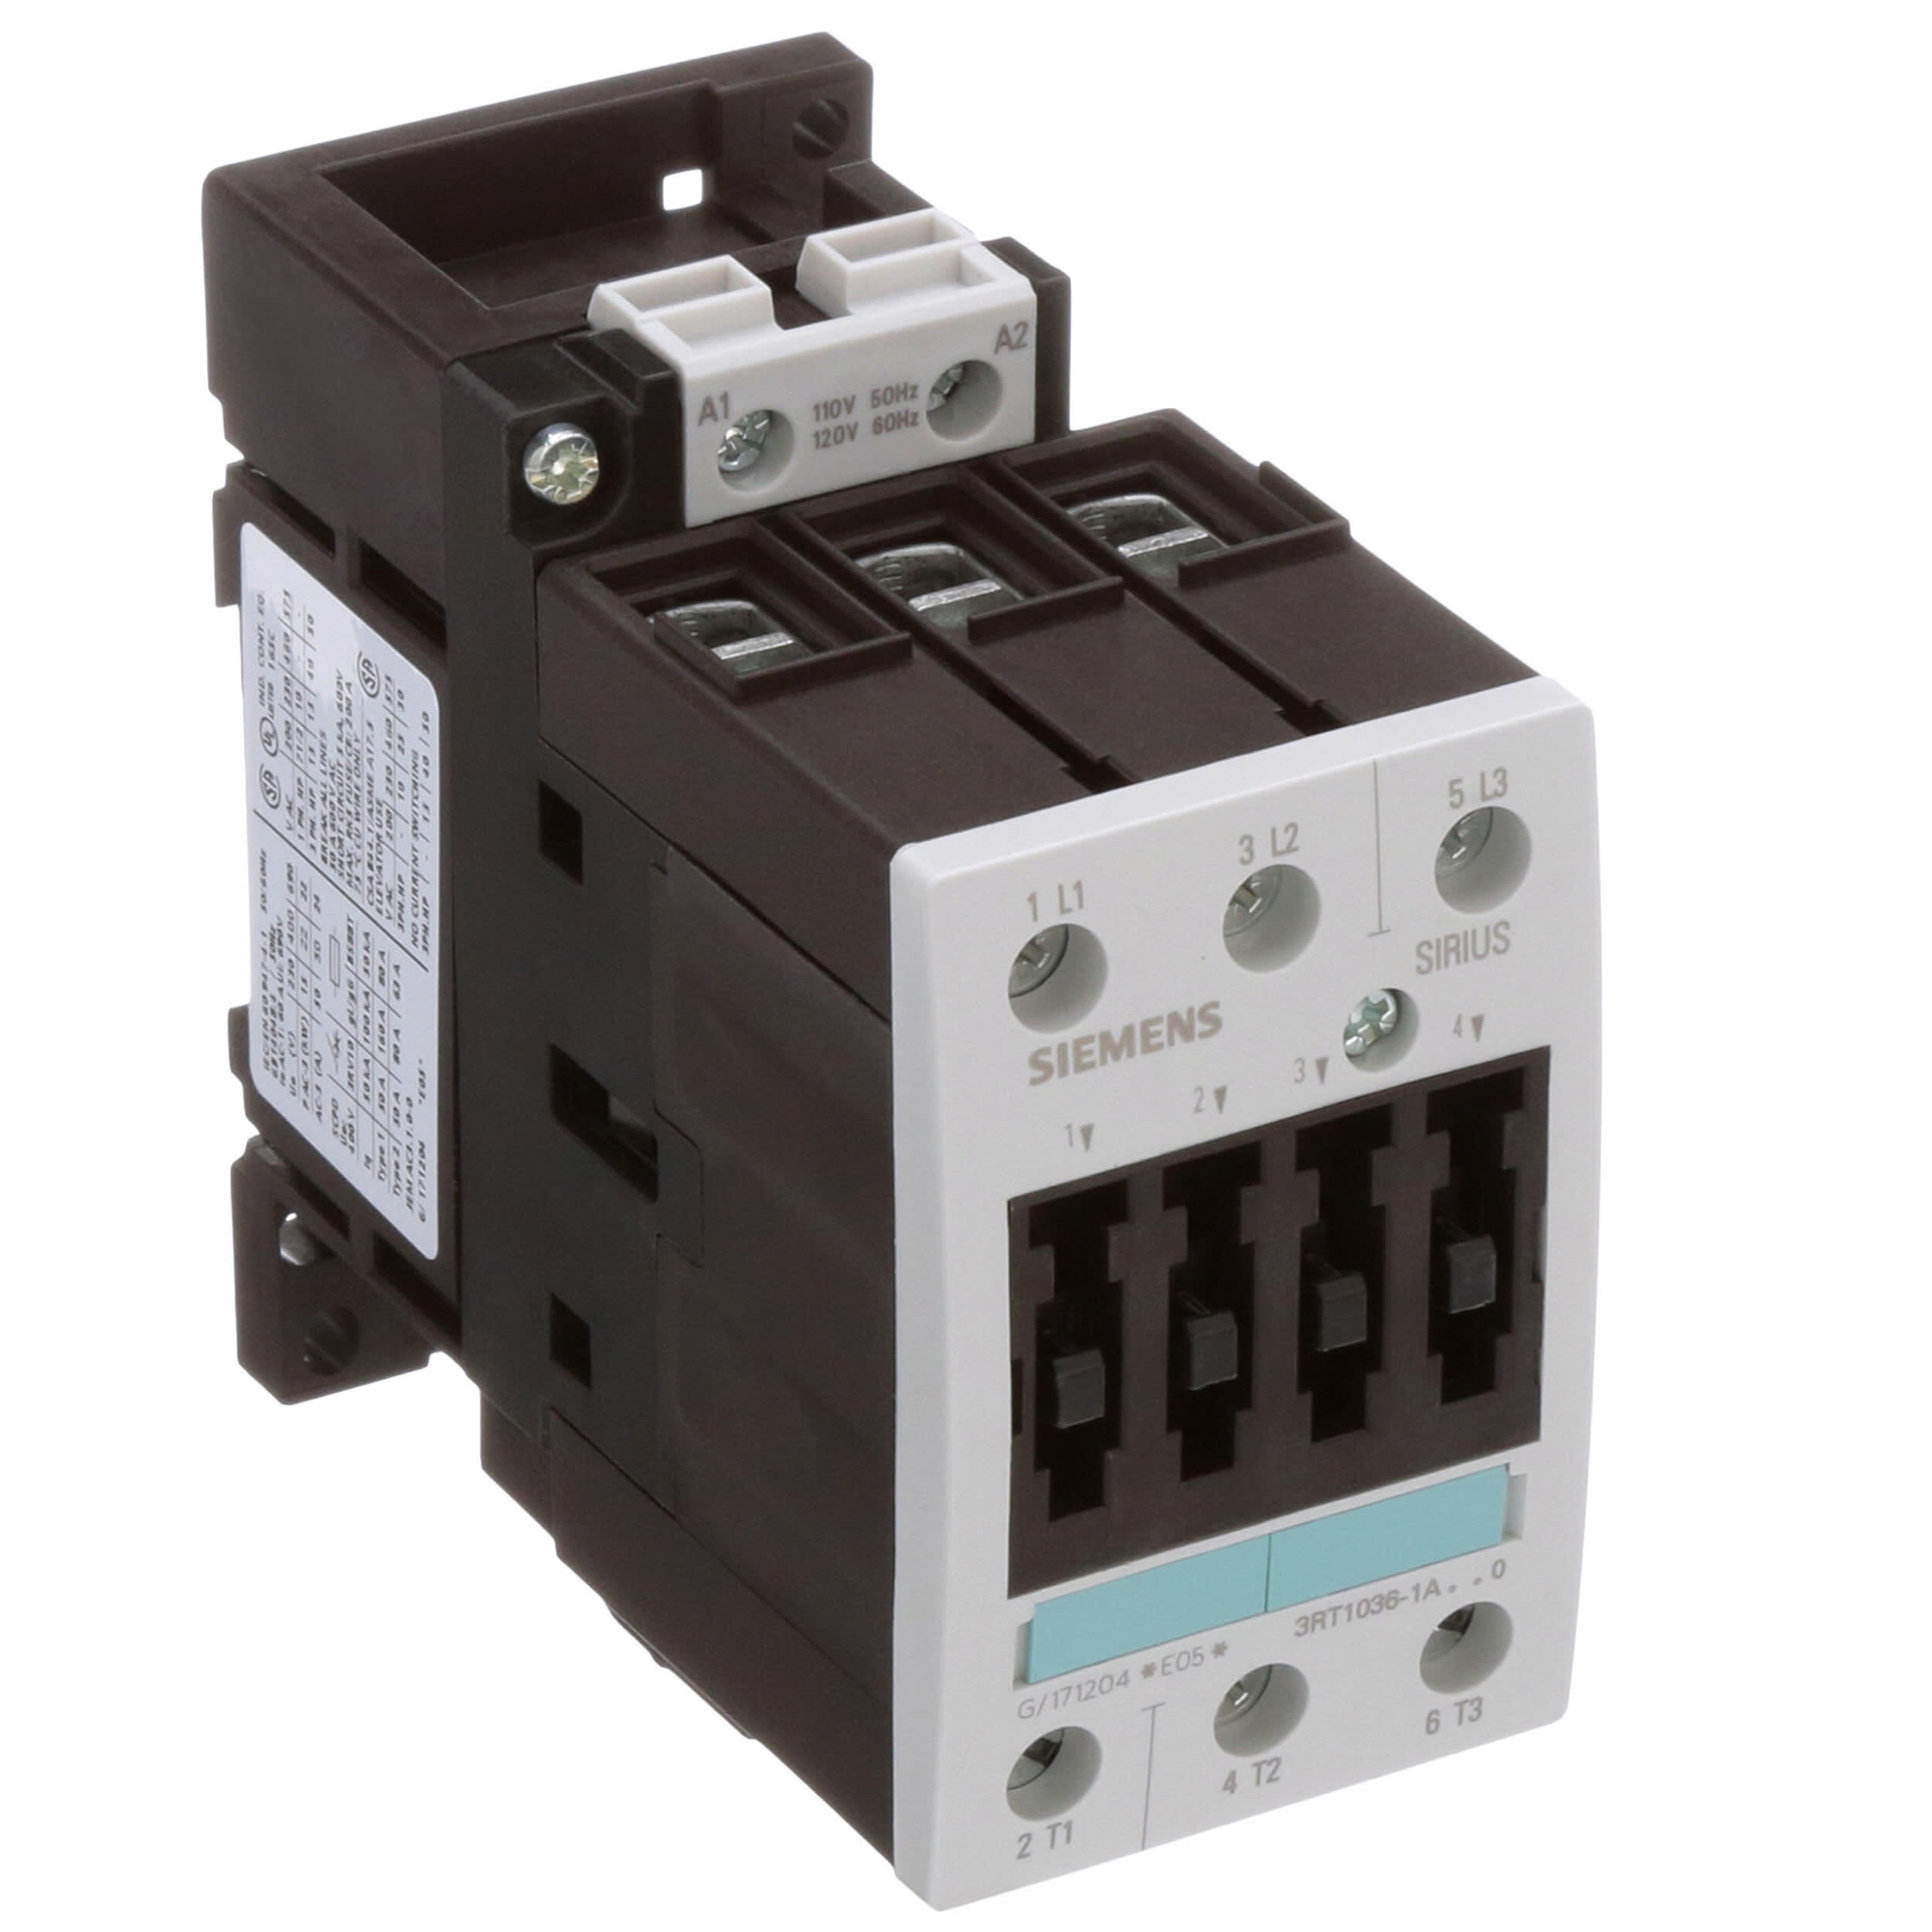 Siemens 208VAC 3-Pole 50A Non-Reversing IEC Magnetic Contactor #3RT1036-1AM20 